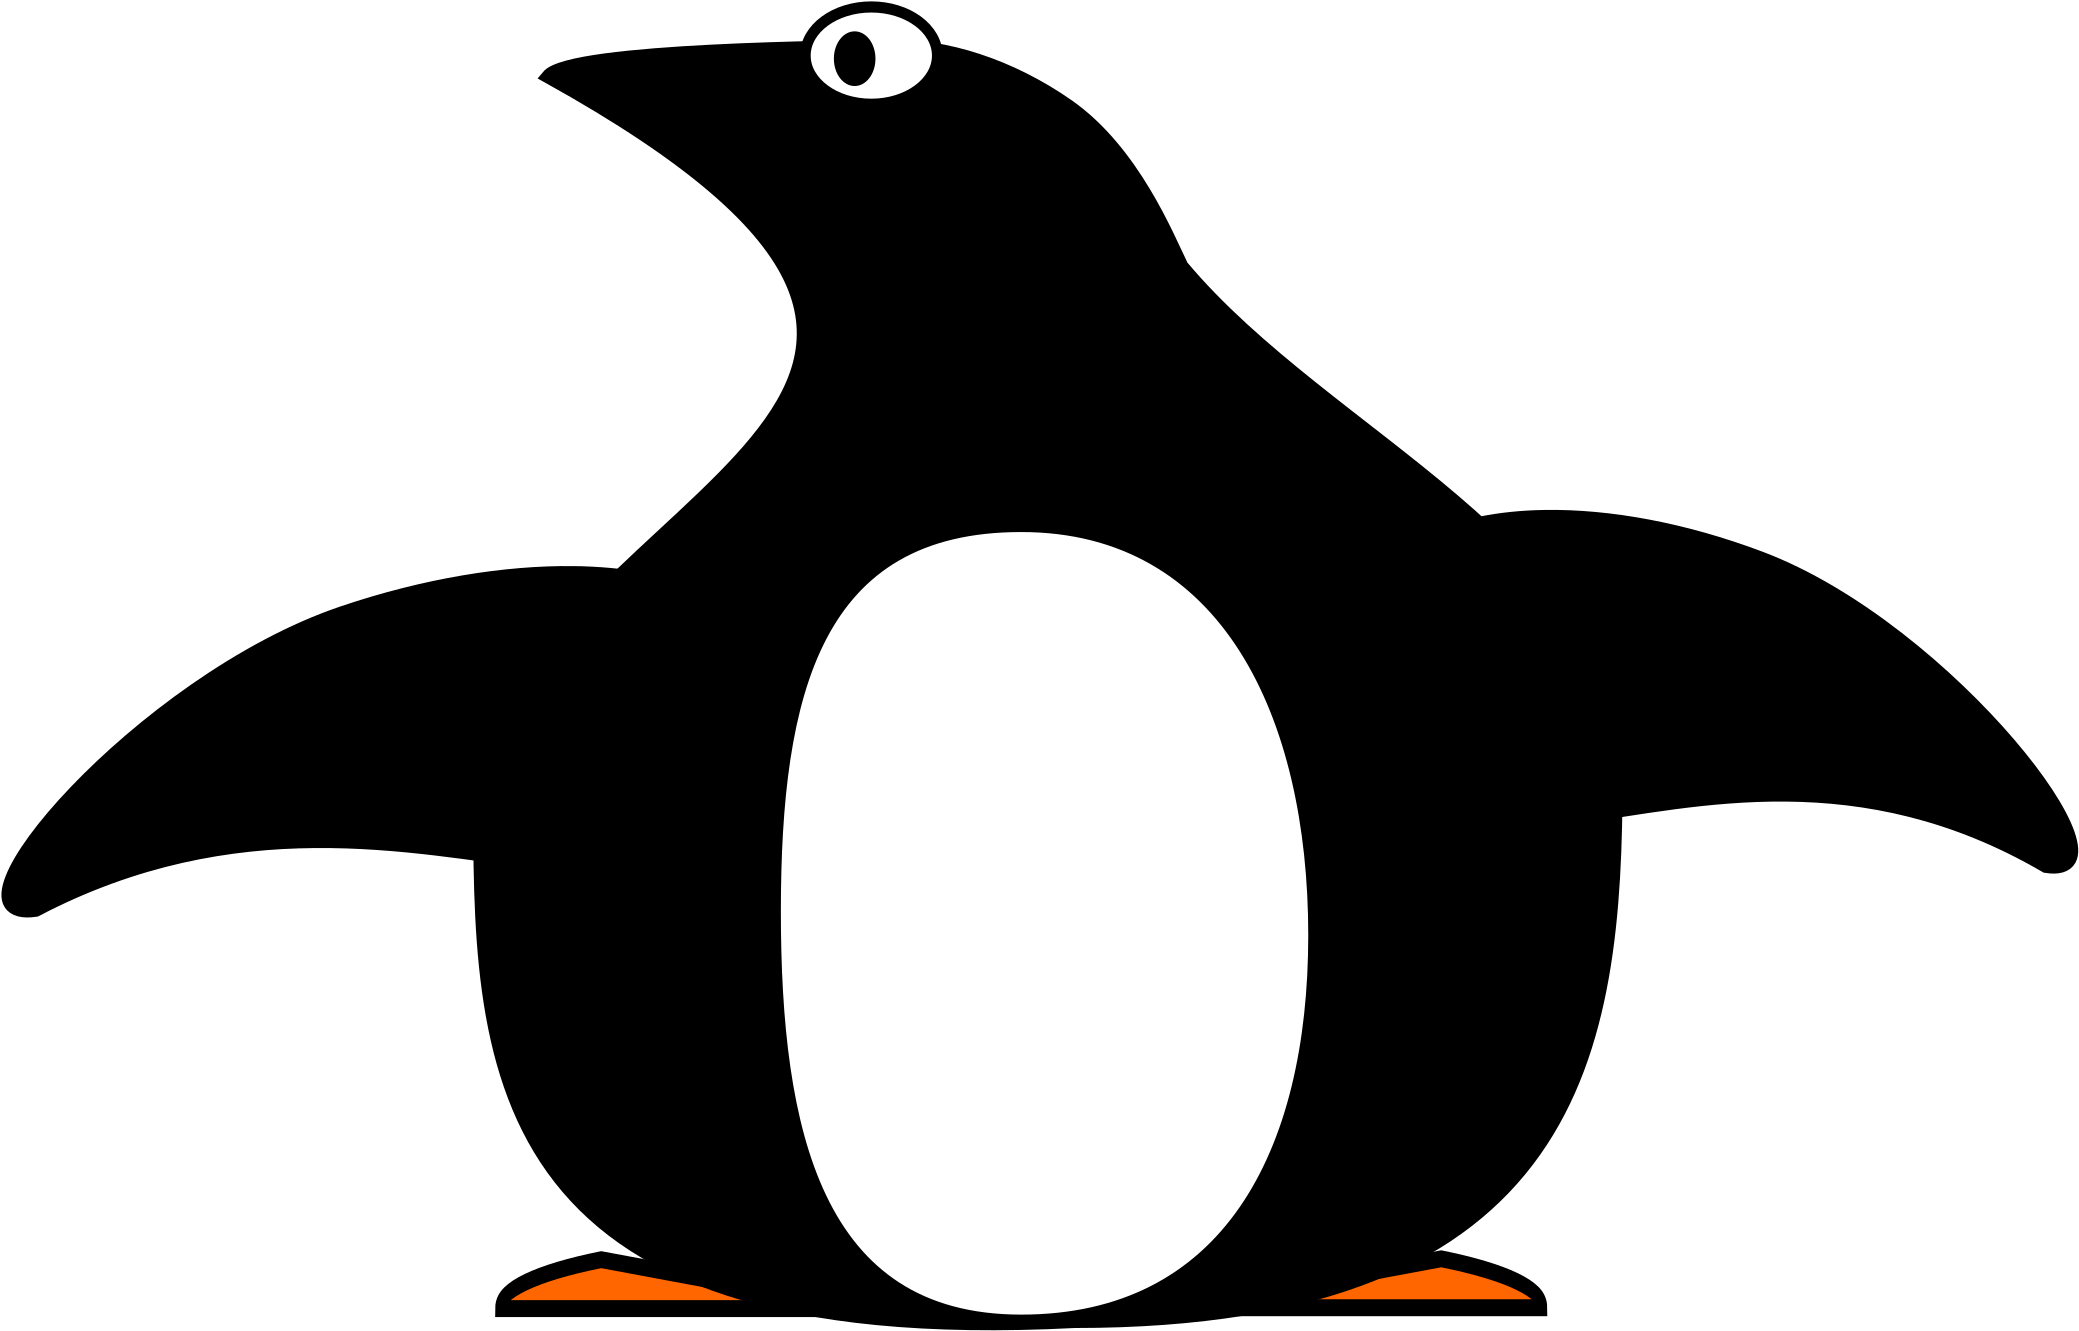 Penguin Black And White Free Penguin Clip Art - สัตว์ นก แพน กวิน การ์ตูน (2400x1697)